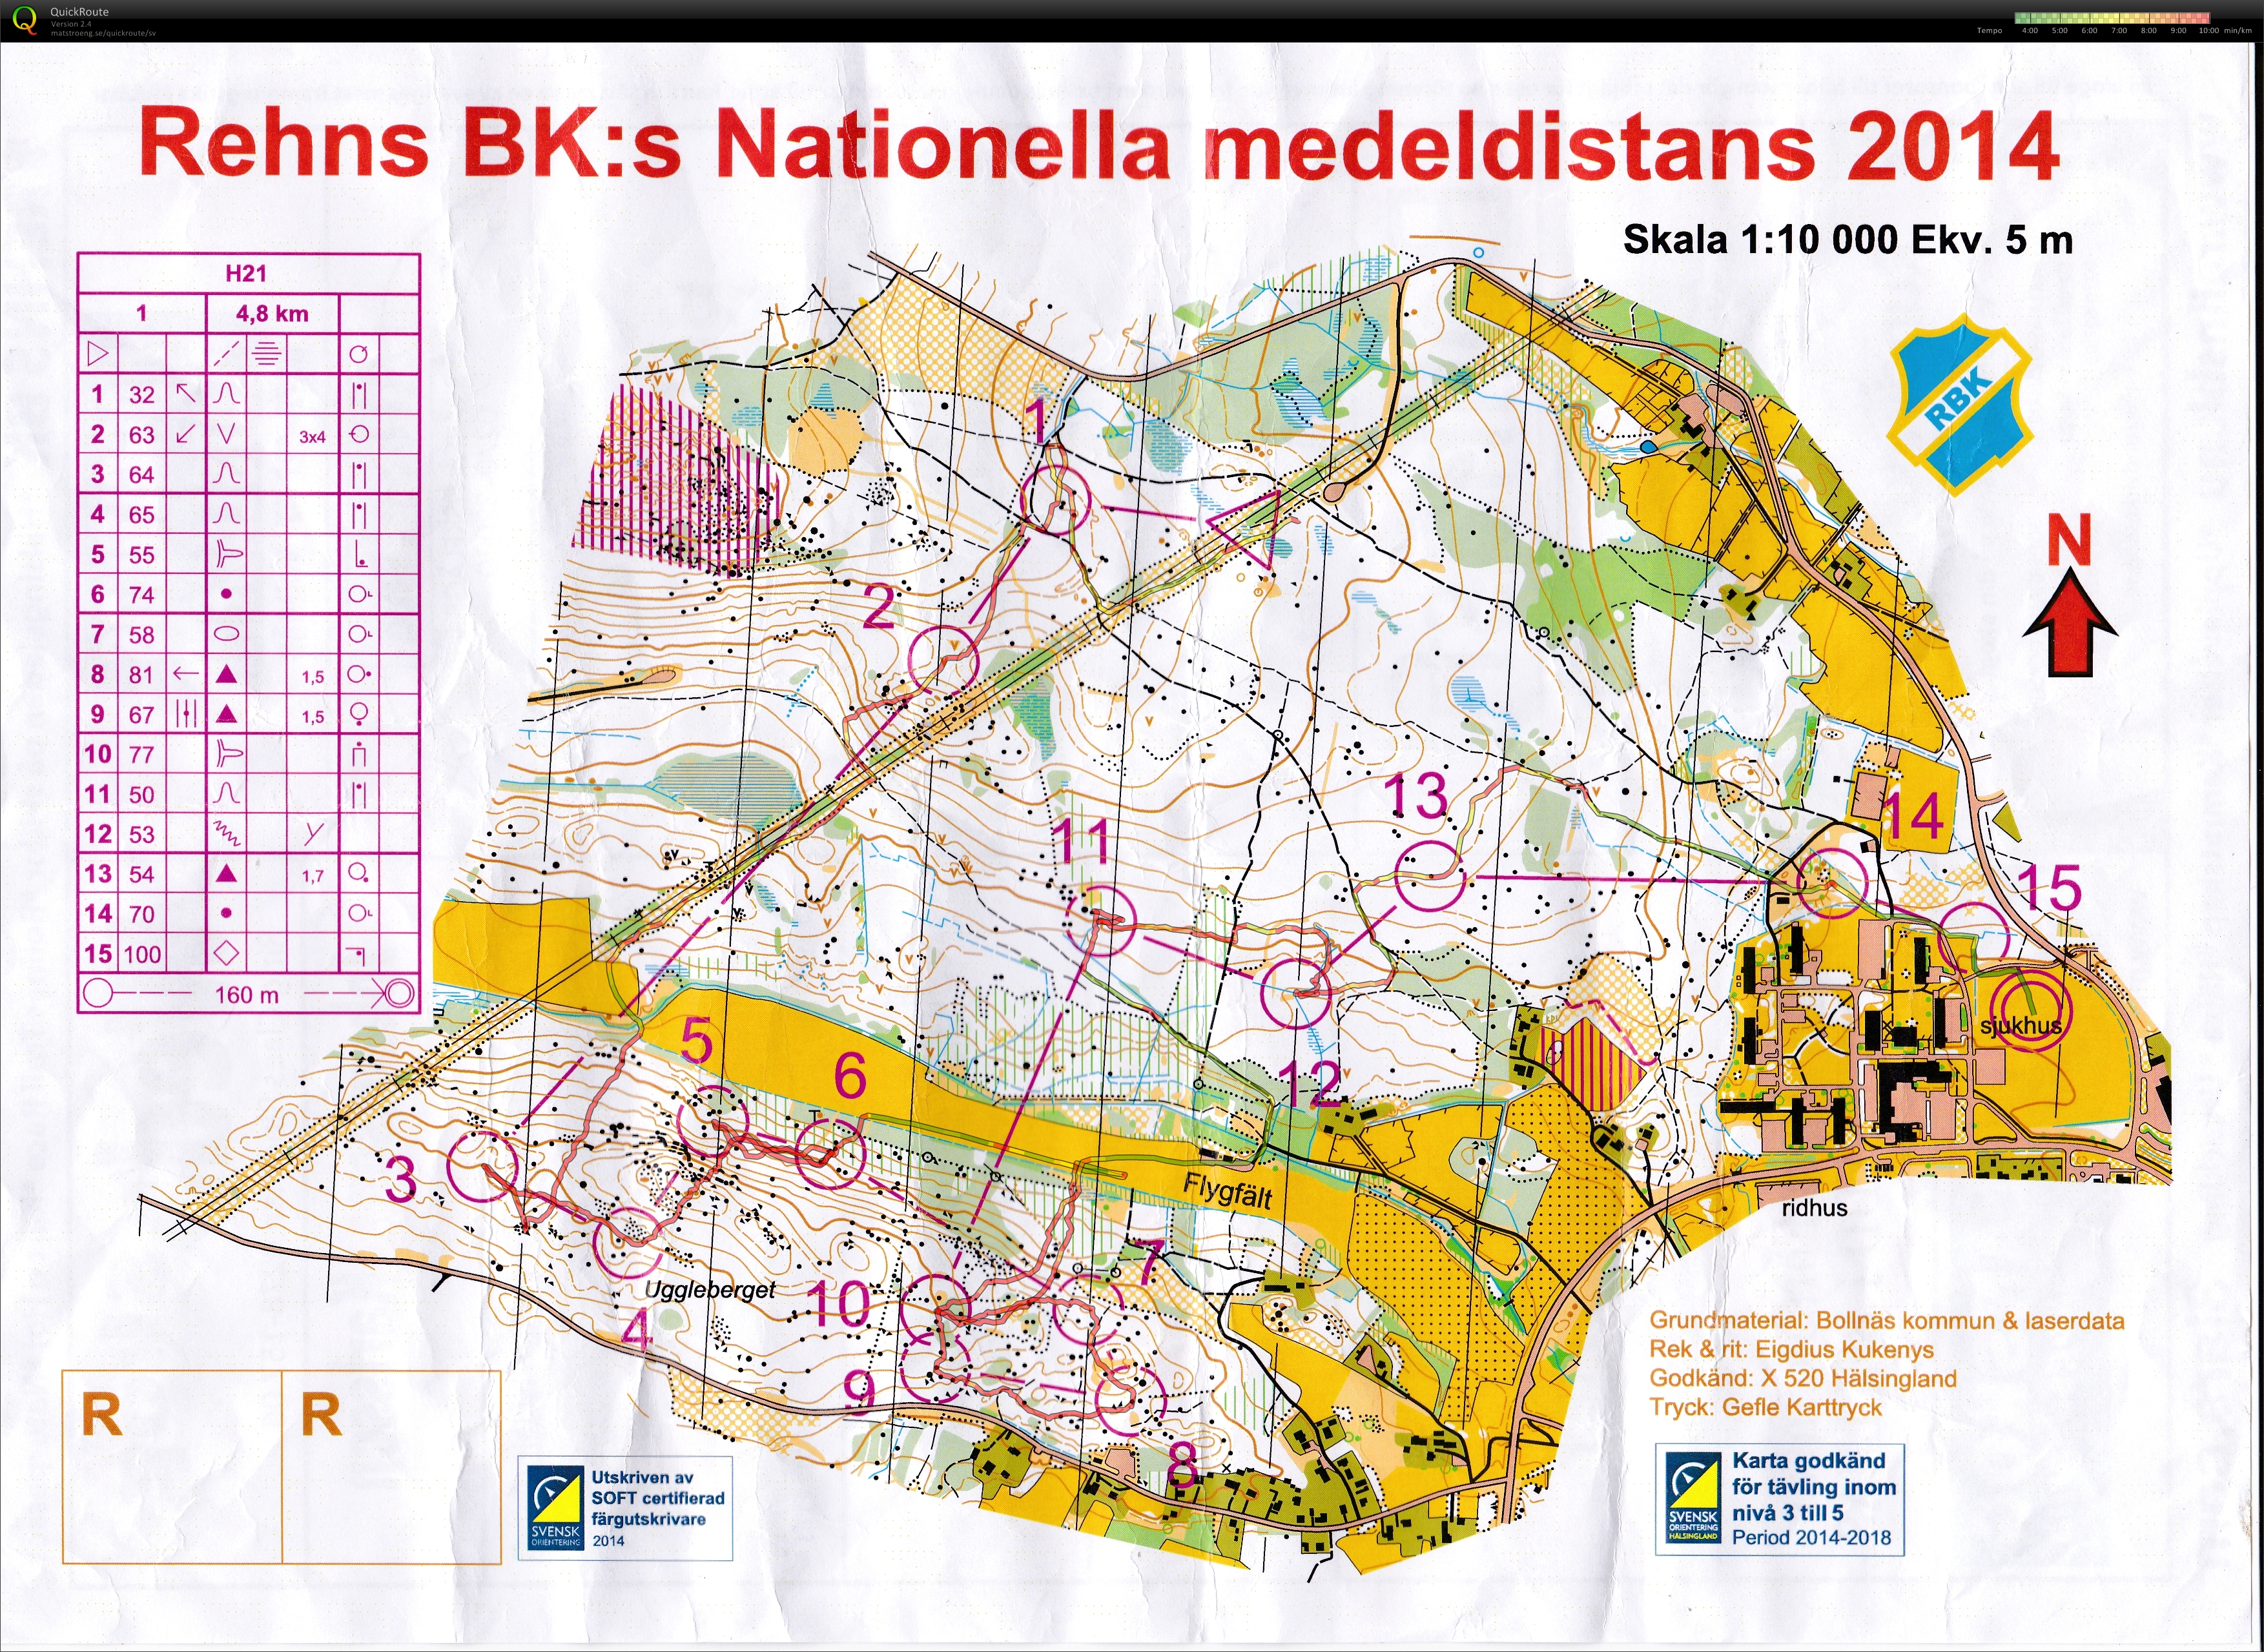 Rehns nationella medeldistans (31-05-2014)